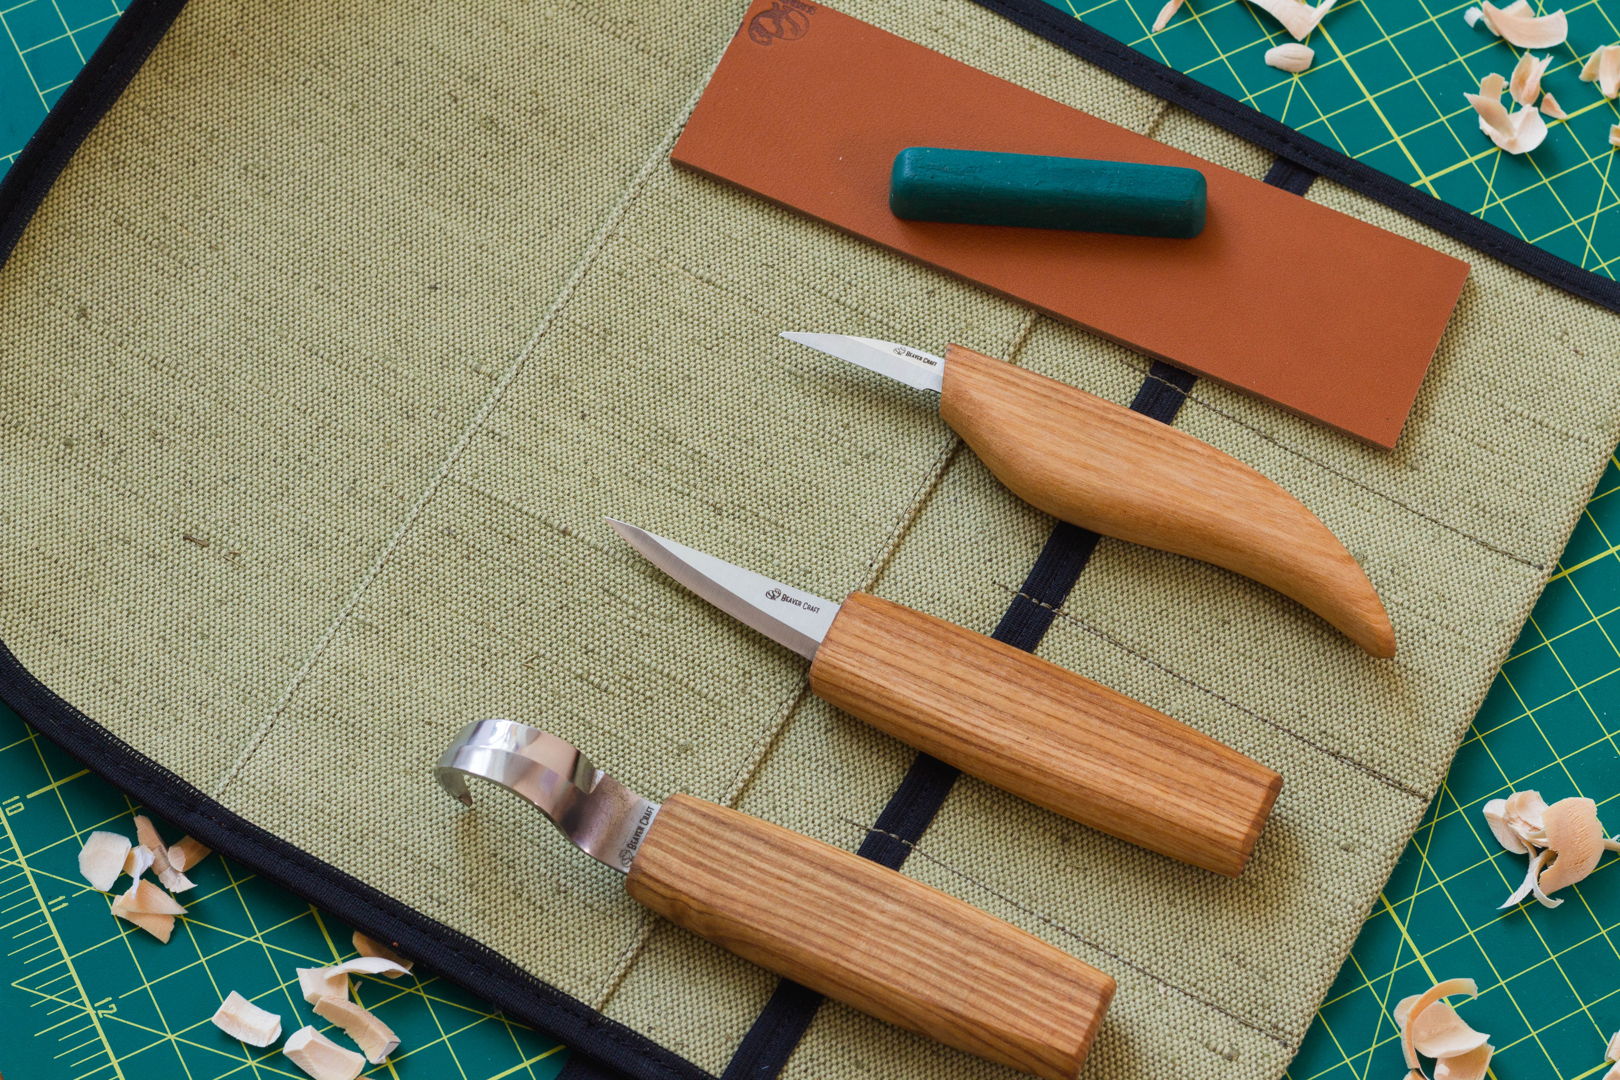 Wood Carving Tools Set Knife Set for Beginner Knives Whittling